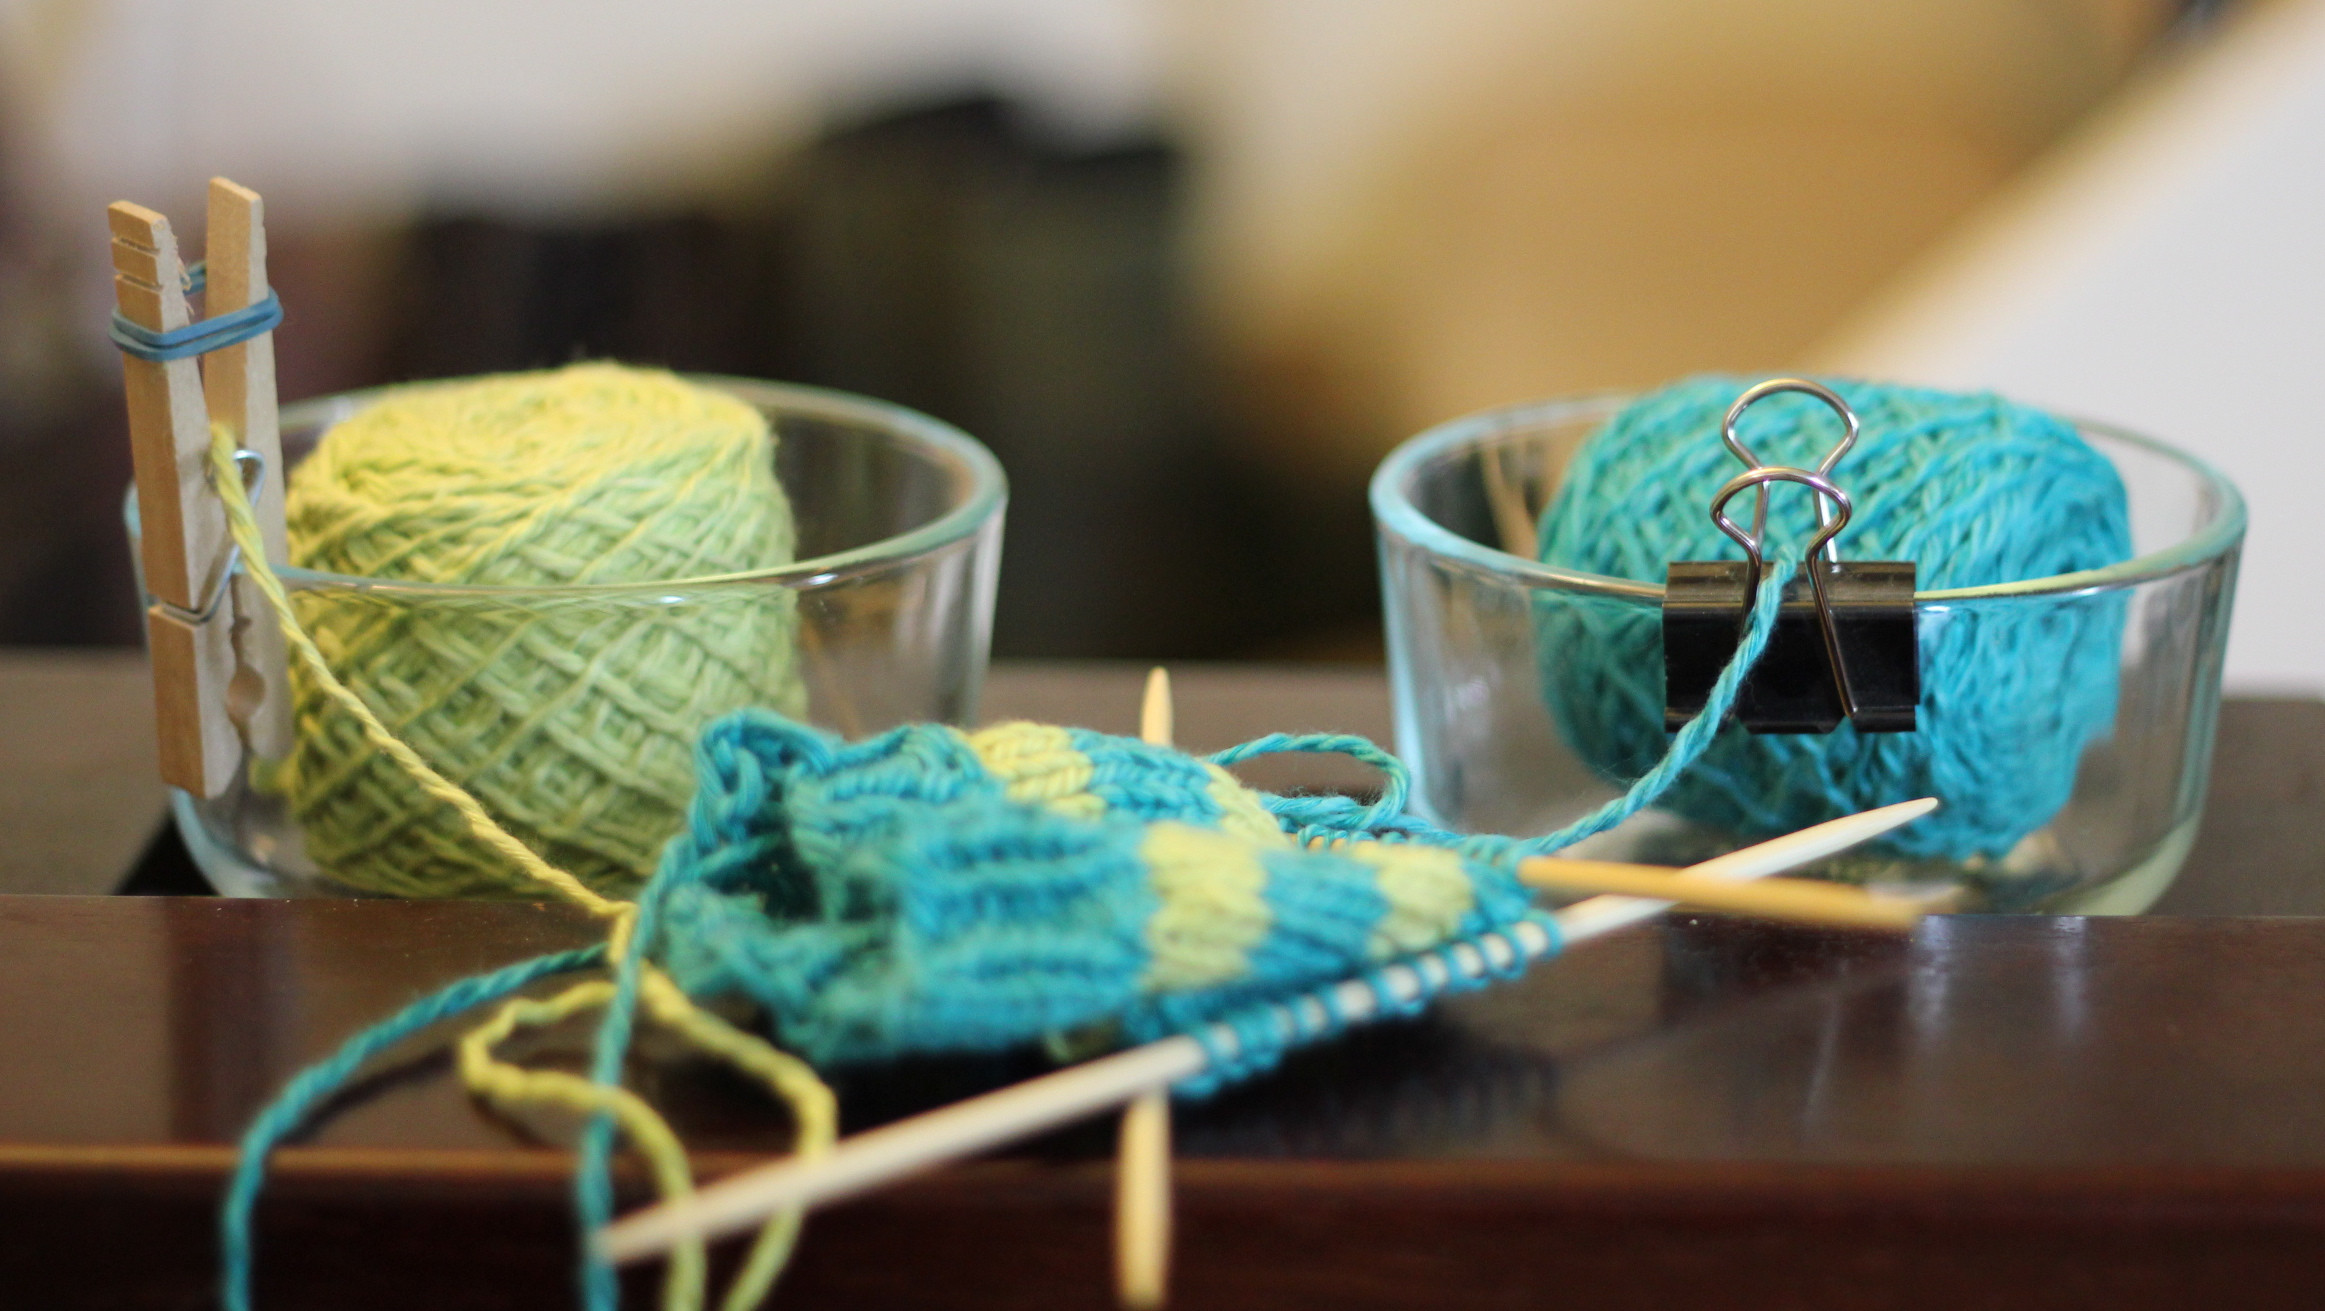 Best ideas about Yarn Bowl DIY
. Save or Pin DIY Yarn Bowl – Pocket Pause Now.